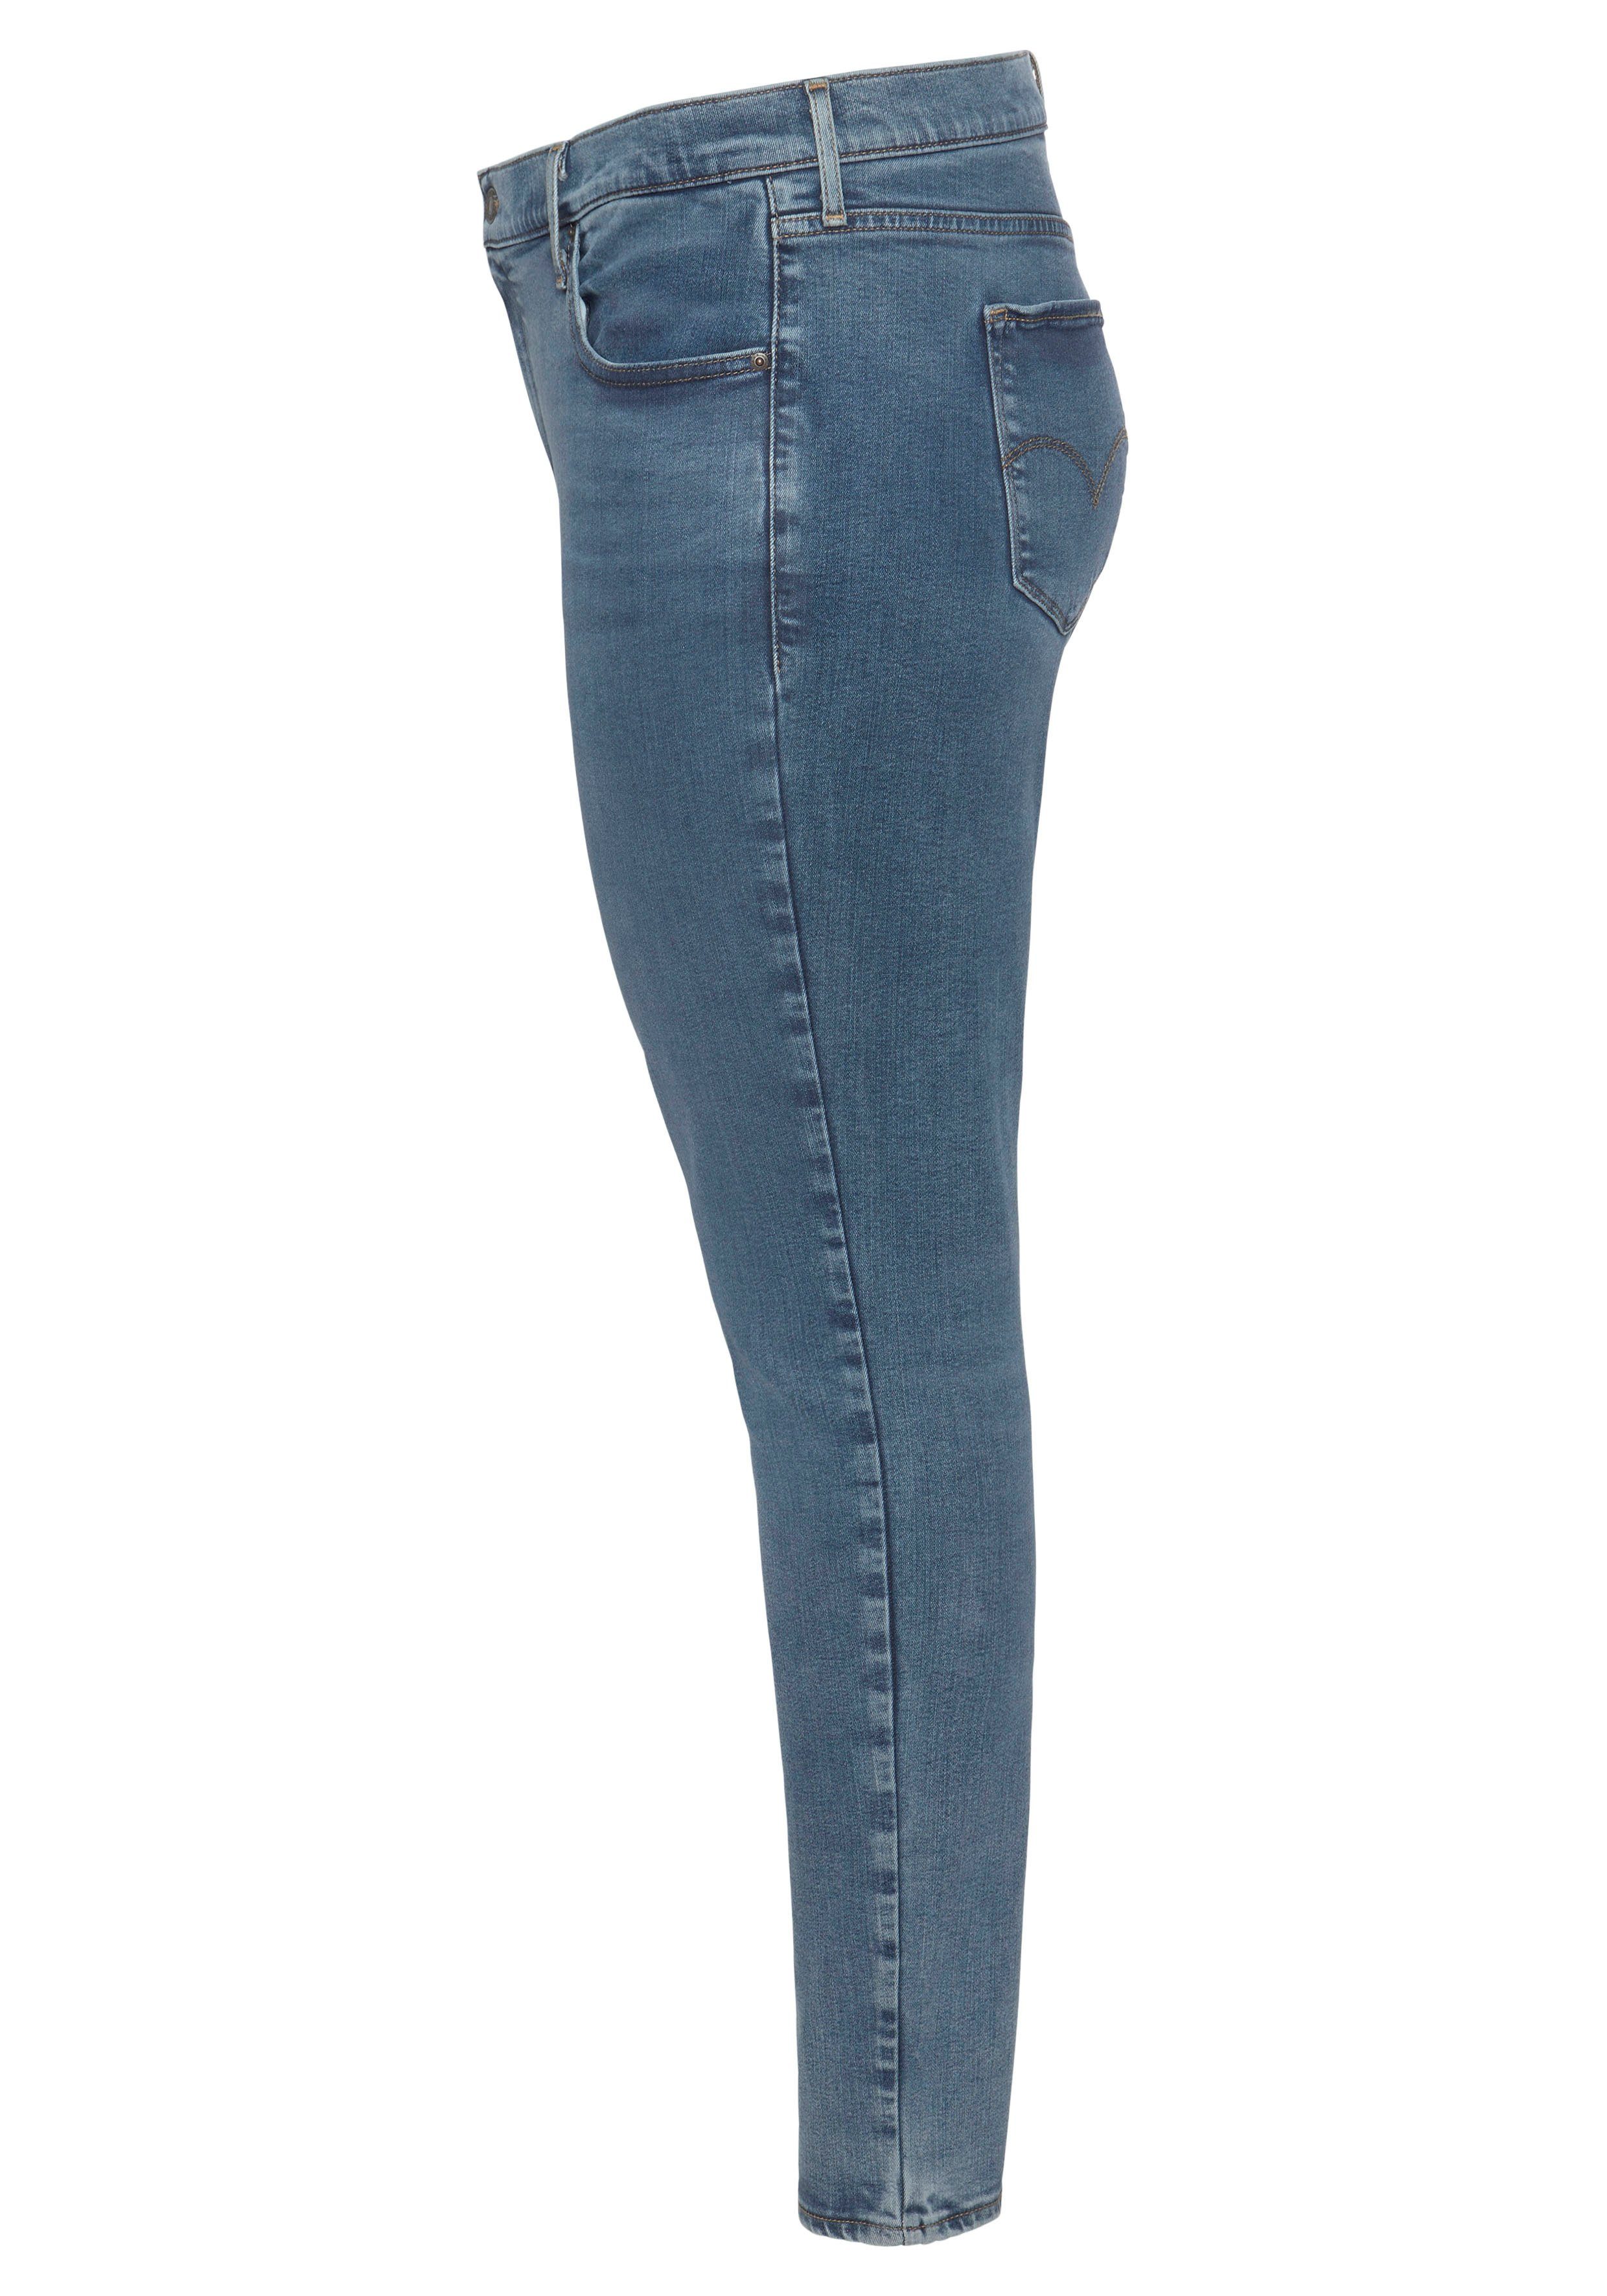 RISE HI figurbetonter Schnitt Plus PL SKINNY Levi's® 721 sehr Skinny-fit-Jeans mid-blue-used